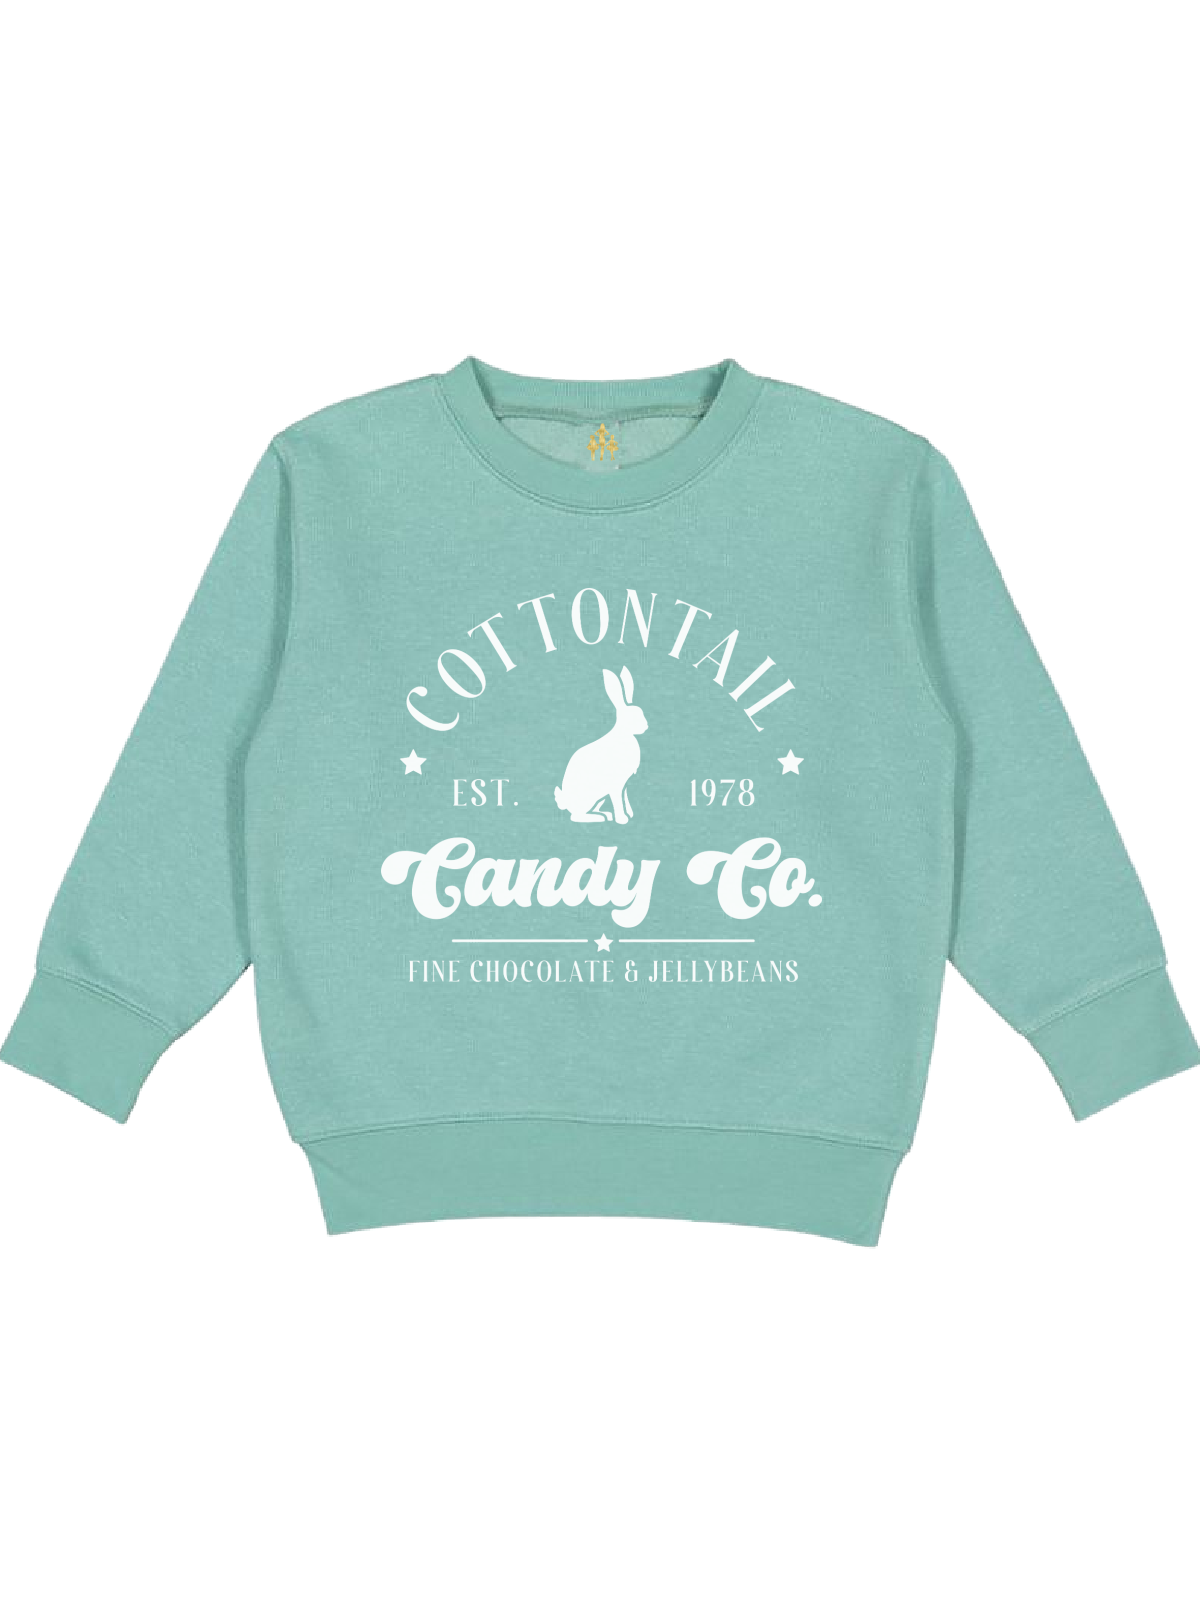 Cottontail Candy Co Kids Sweatshirt & Shirt - Saltwater